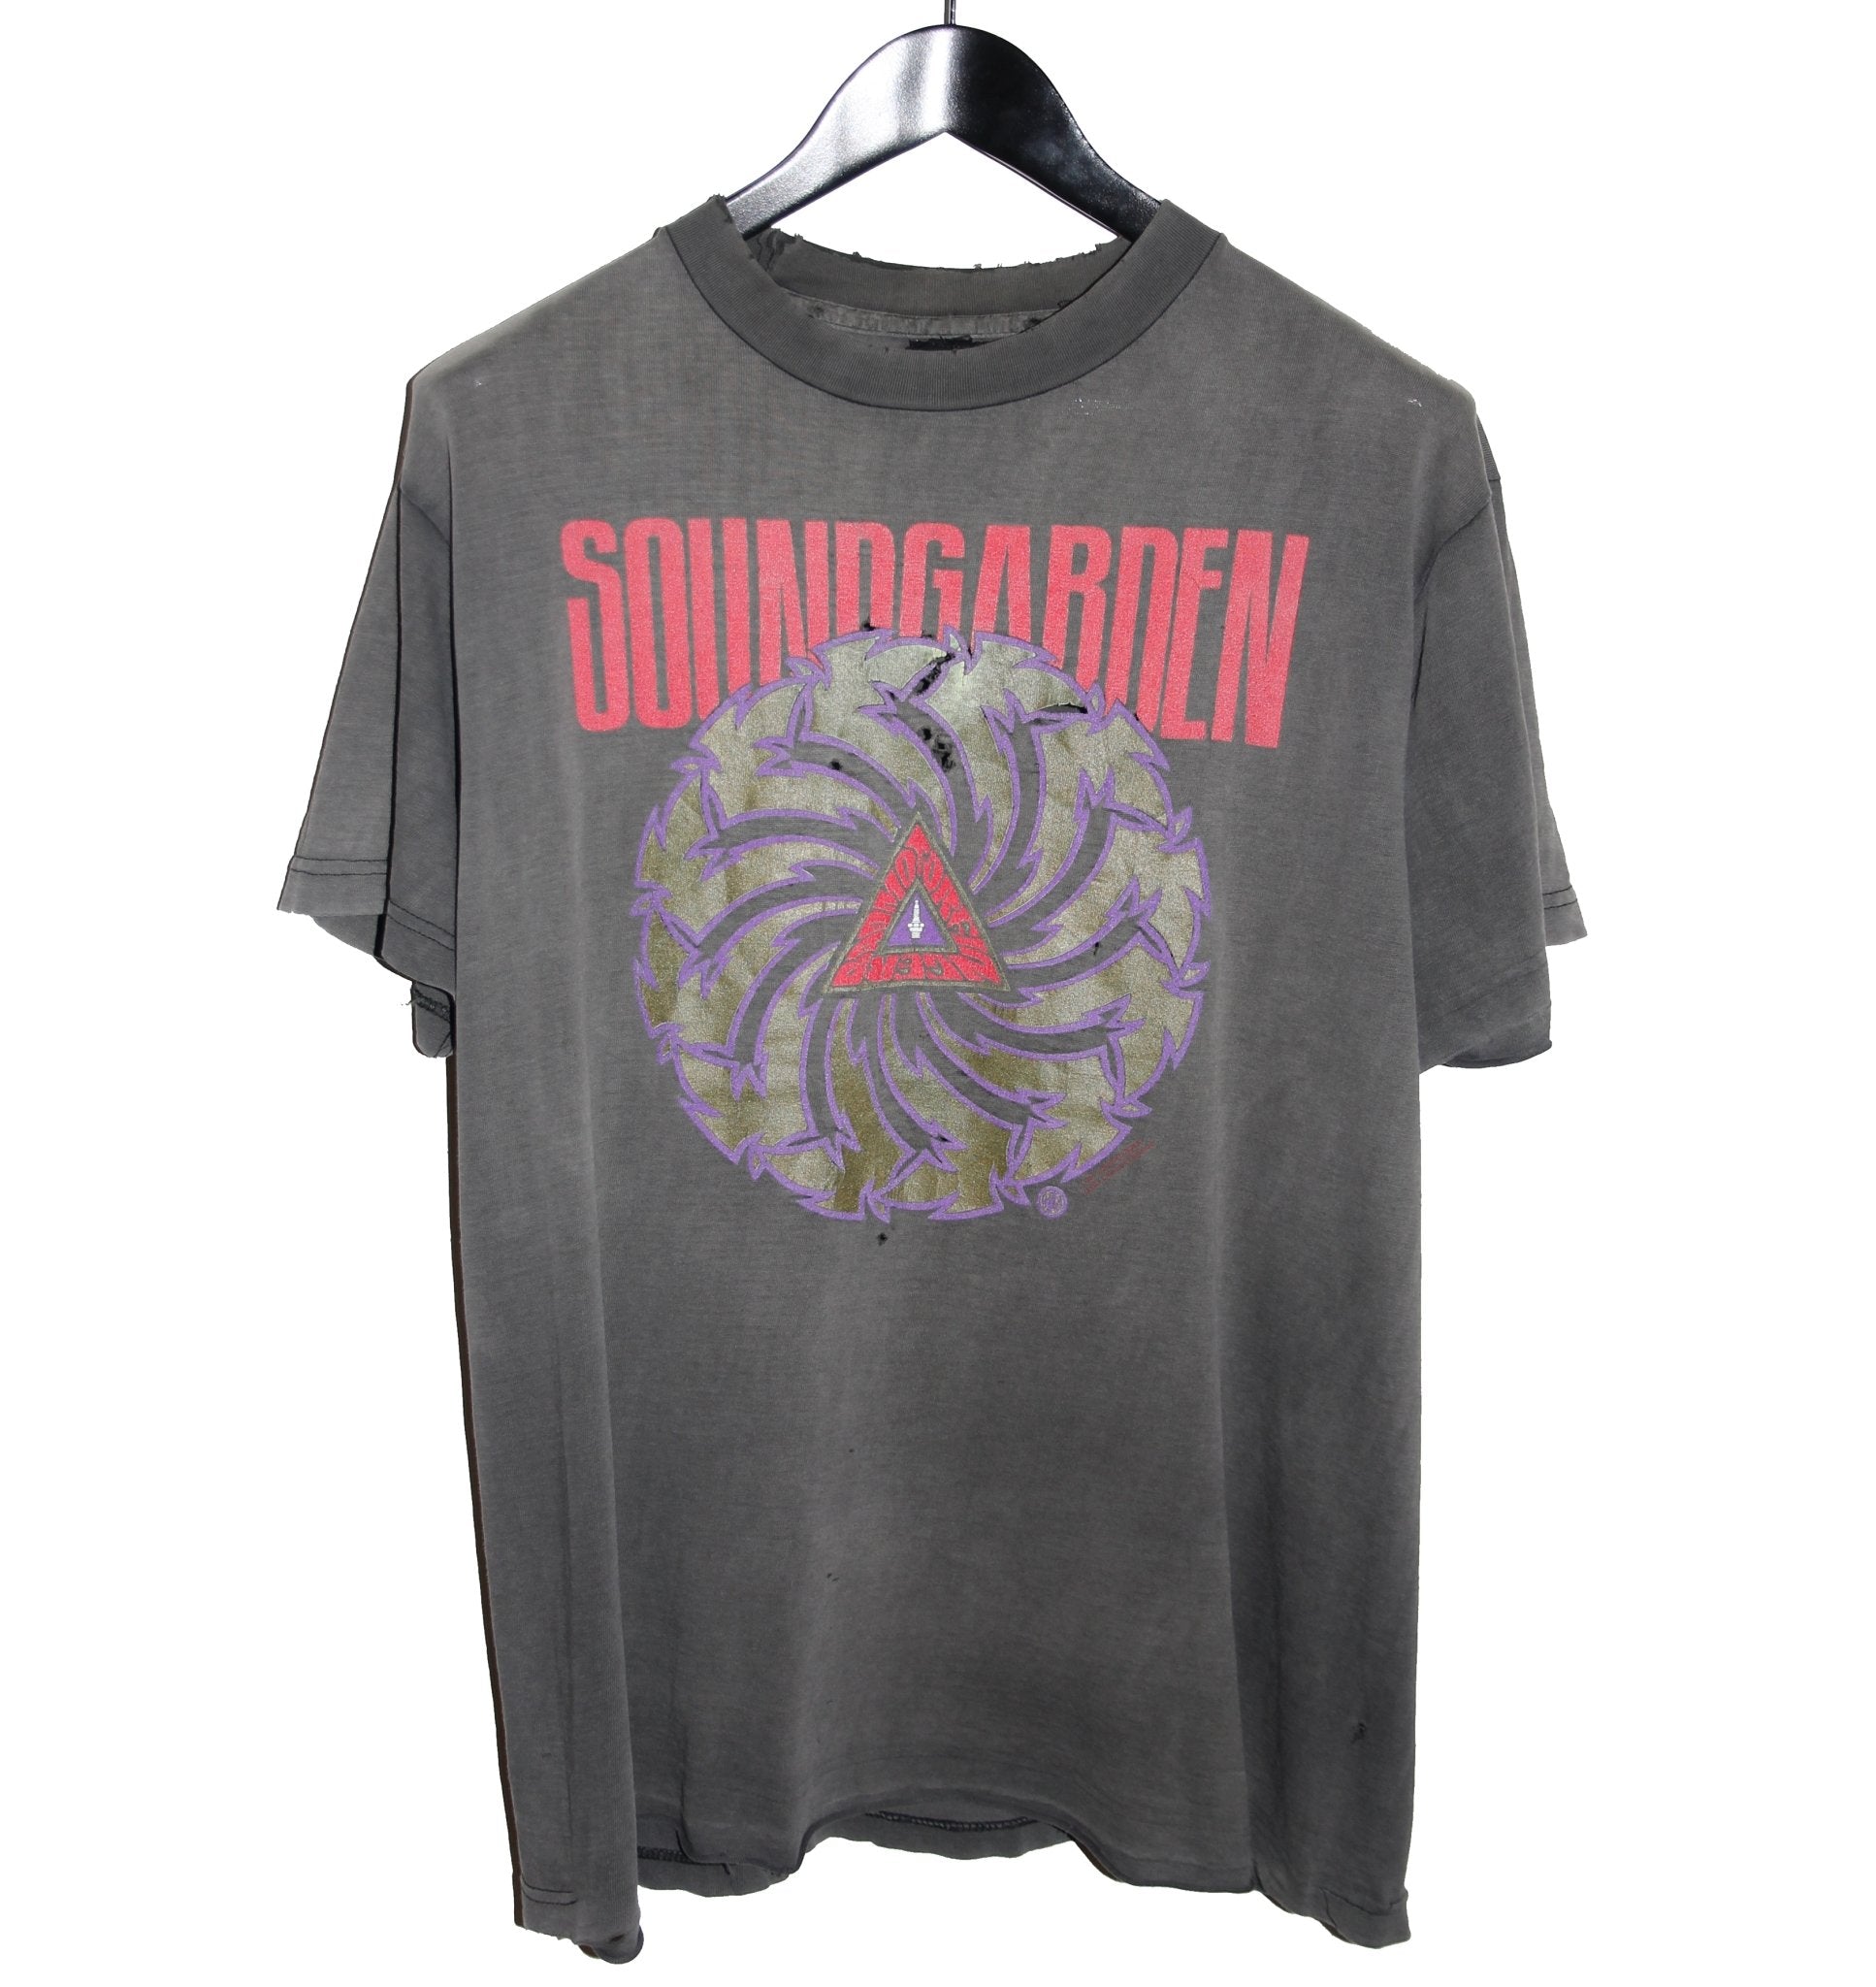 Soundgarden 1991 Badmotorfinger Album Shirt - Faded AU